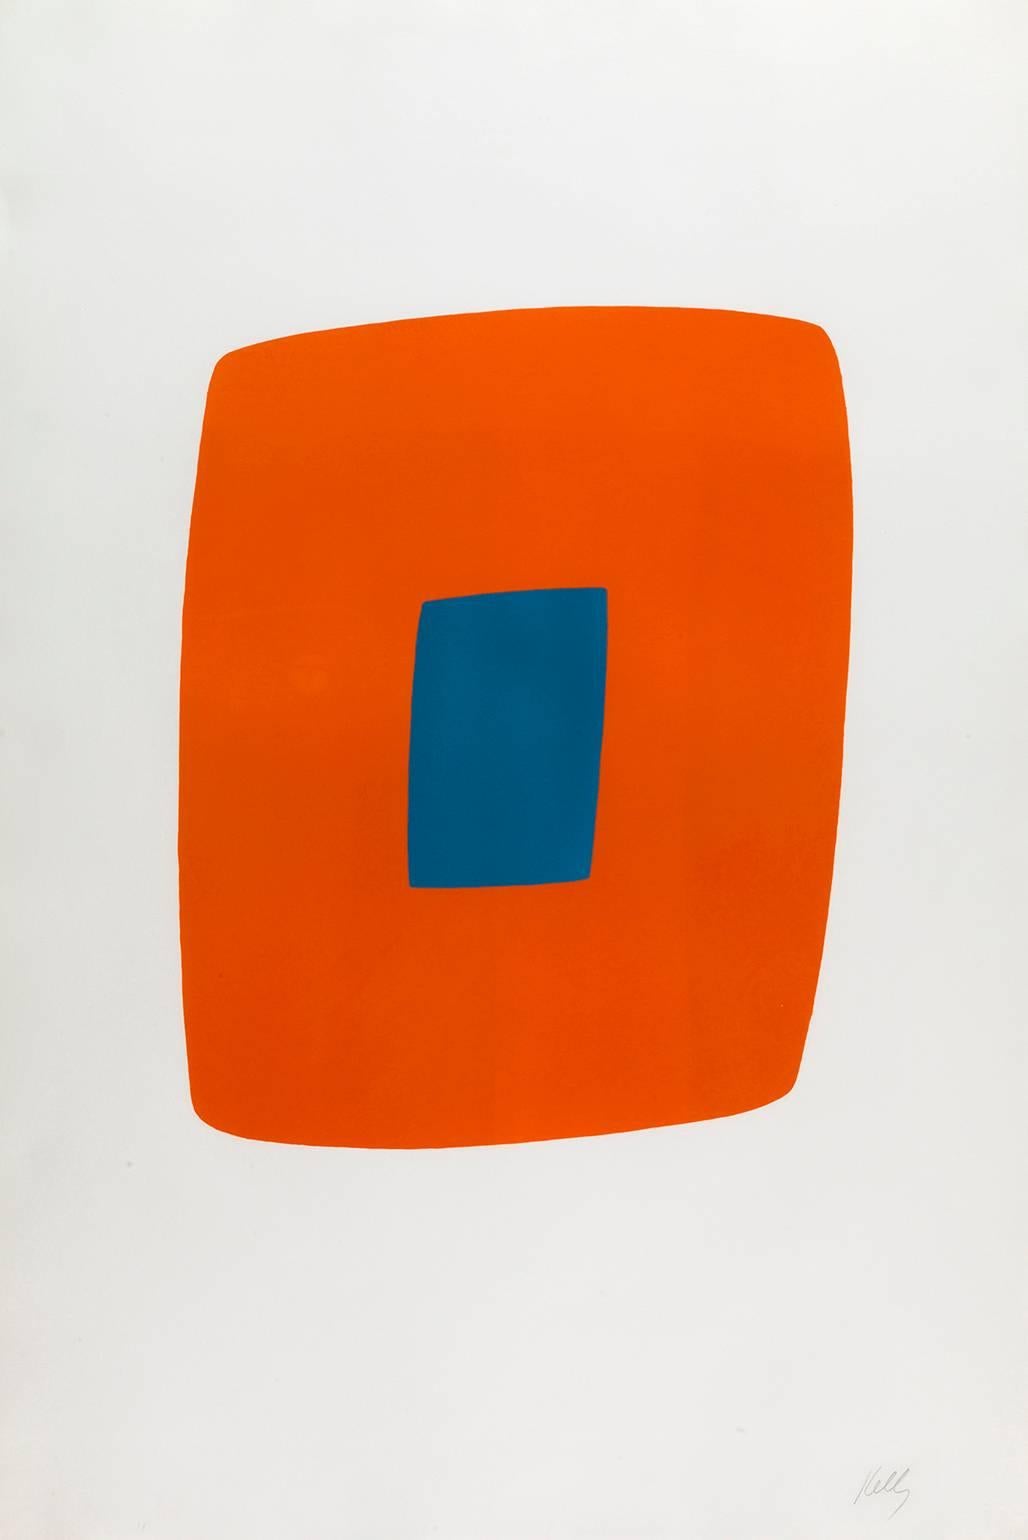 Ellsworth Kelly Abstract Print - Orange with Blue